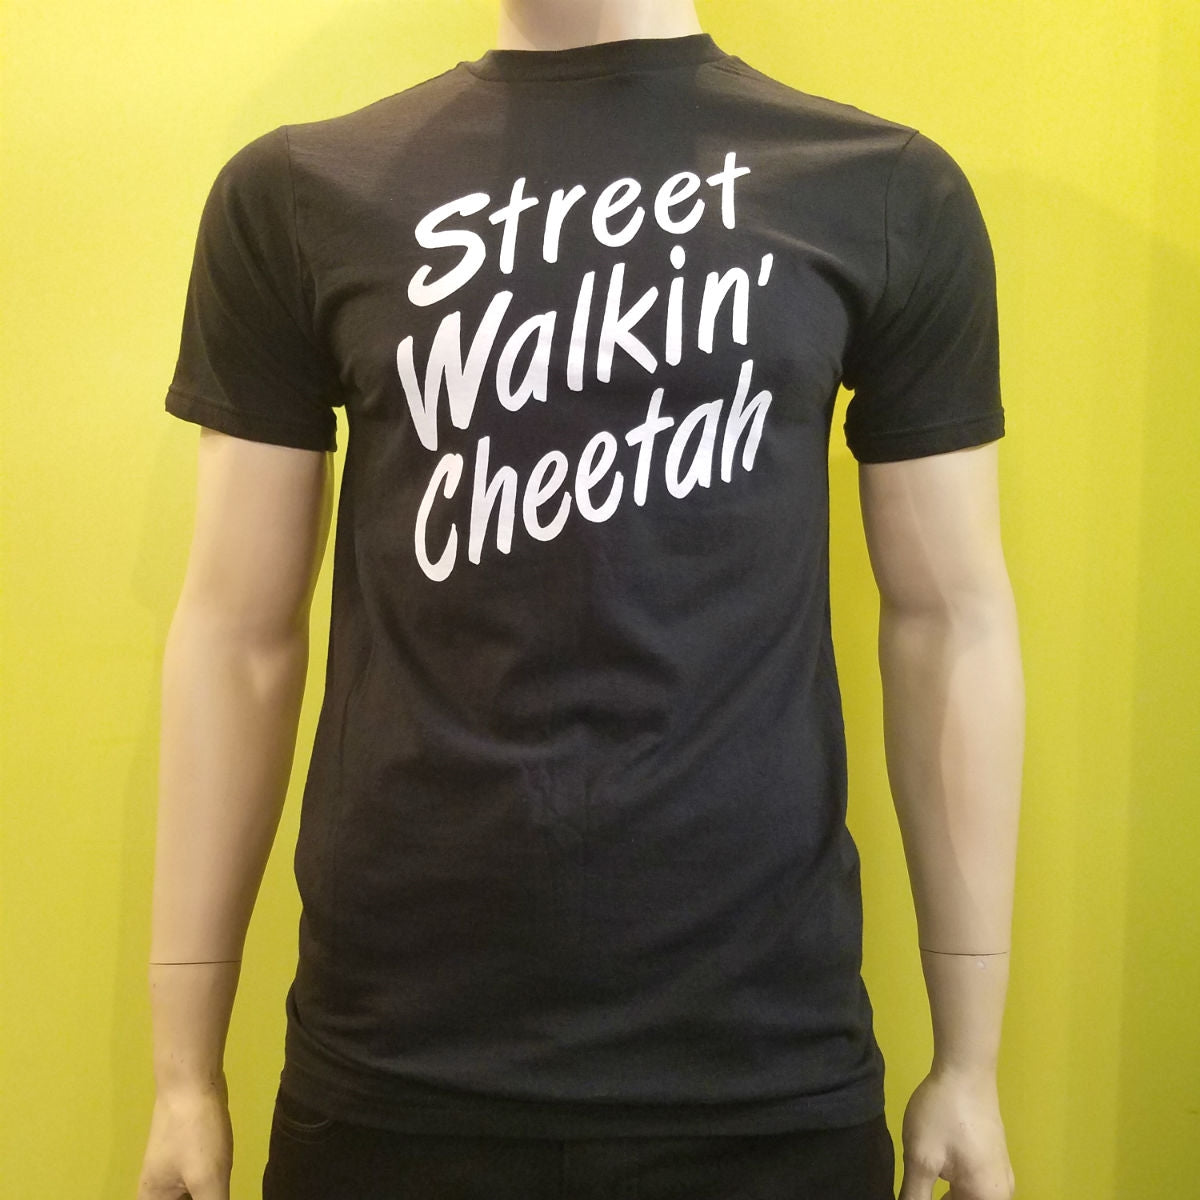 "Street Walkin' Cheetah" fitted black unisex/men's sizing t-shirt shown on mannequin